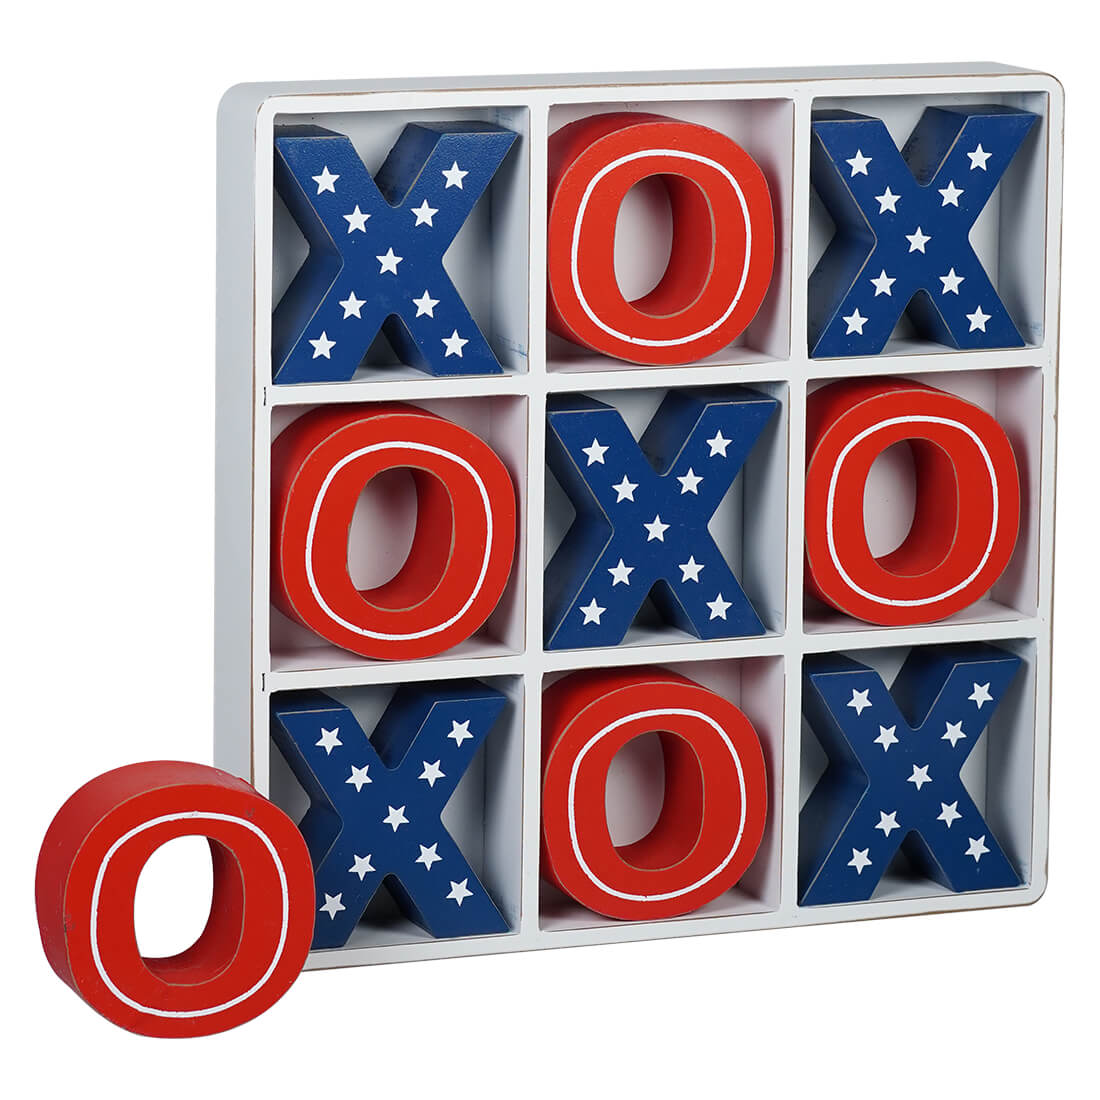 Wooden Patriotic Tabletop Tic-Tac-Toe Game S/10